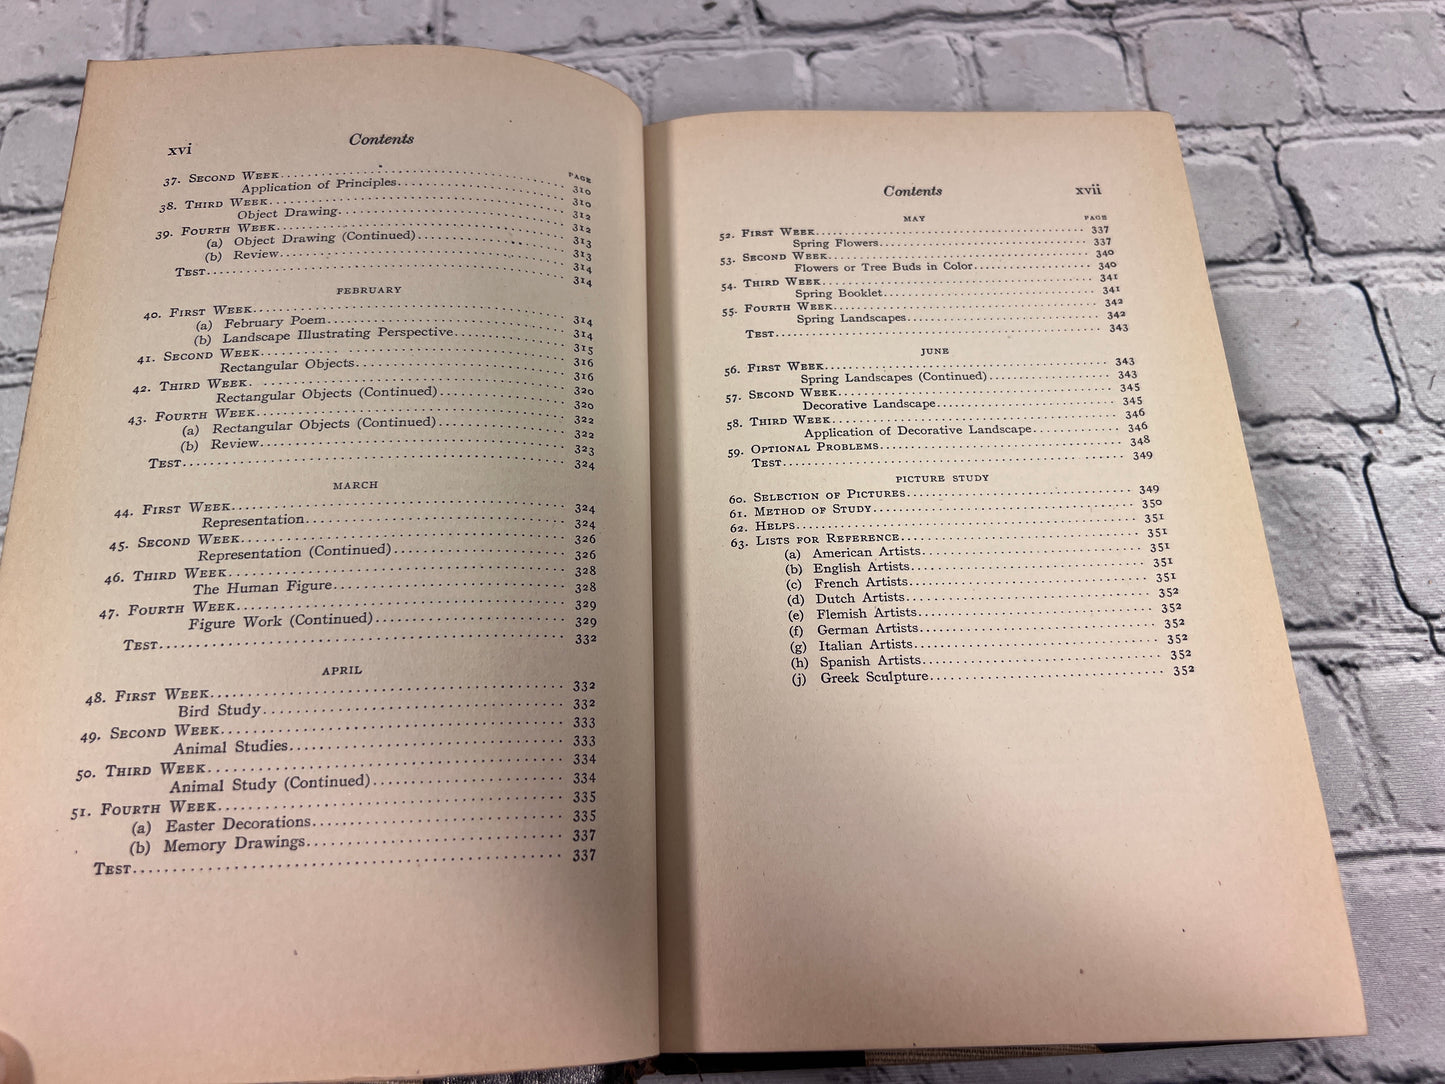 Public School Methods Volume One by Various Authors [1913]